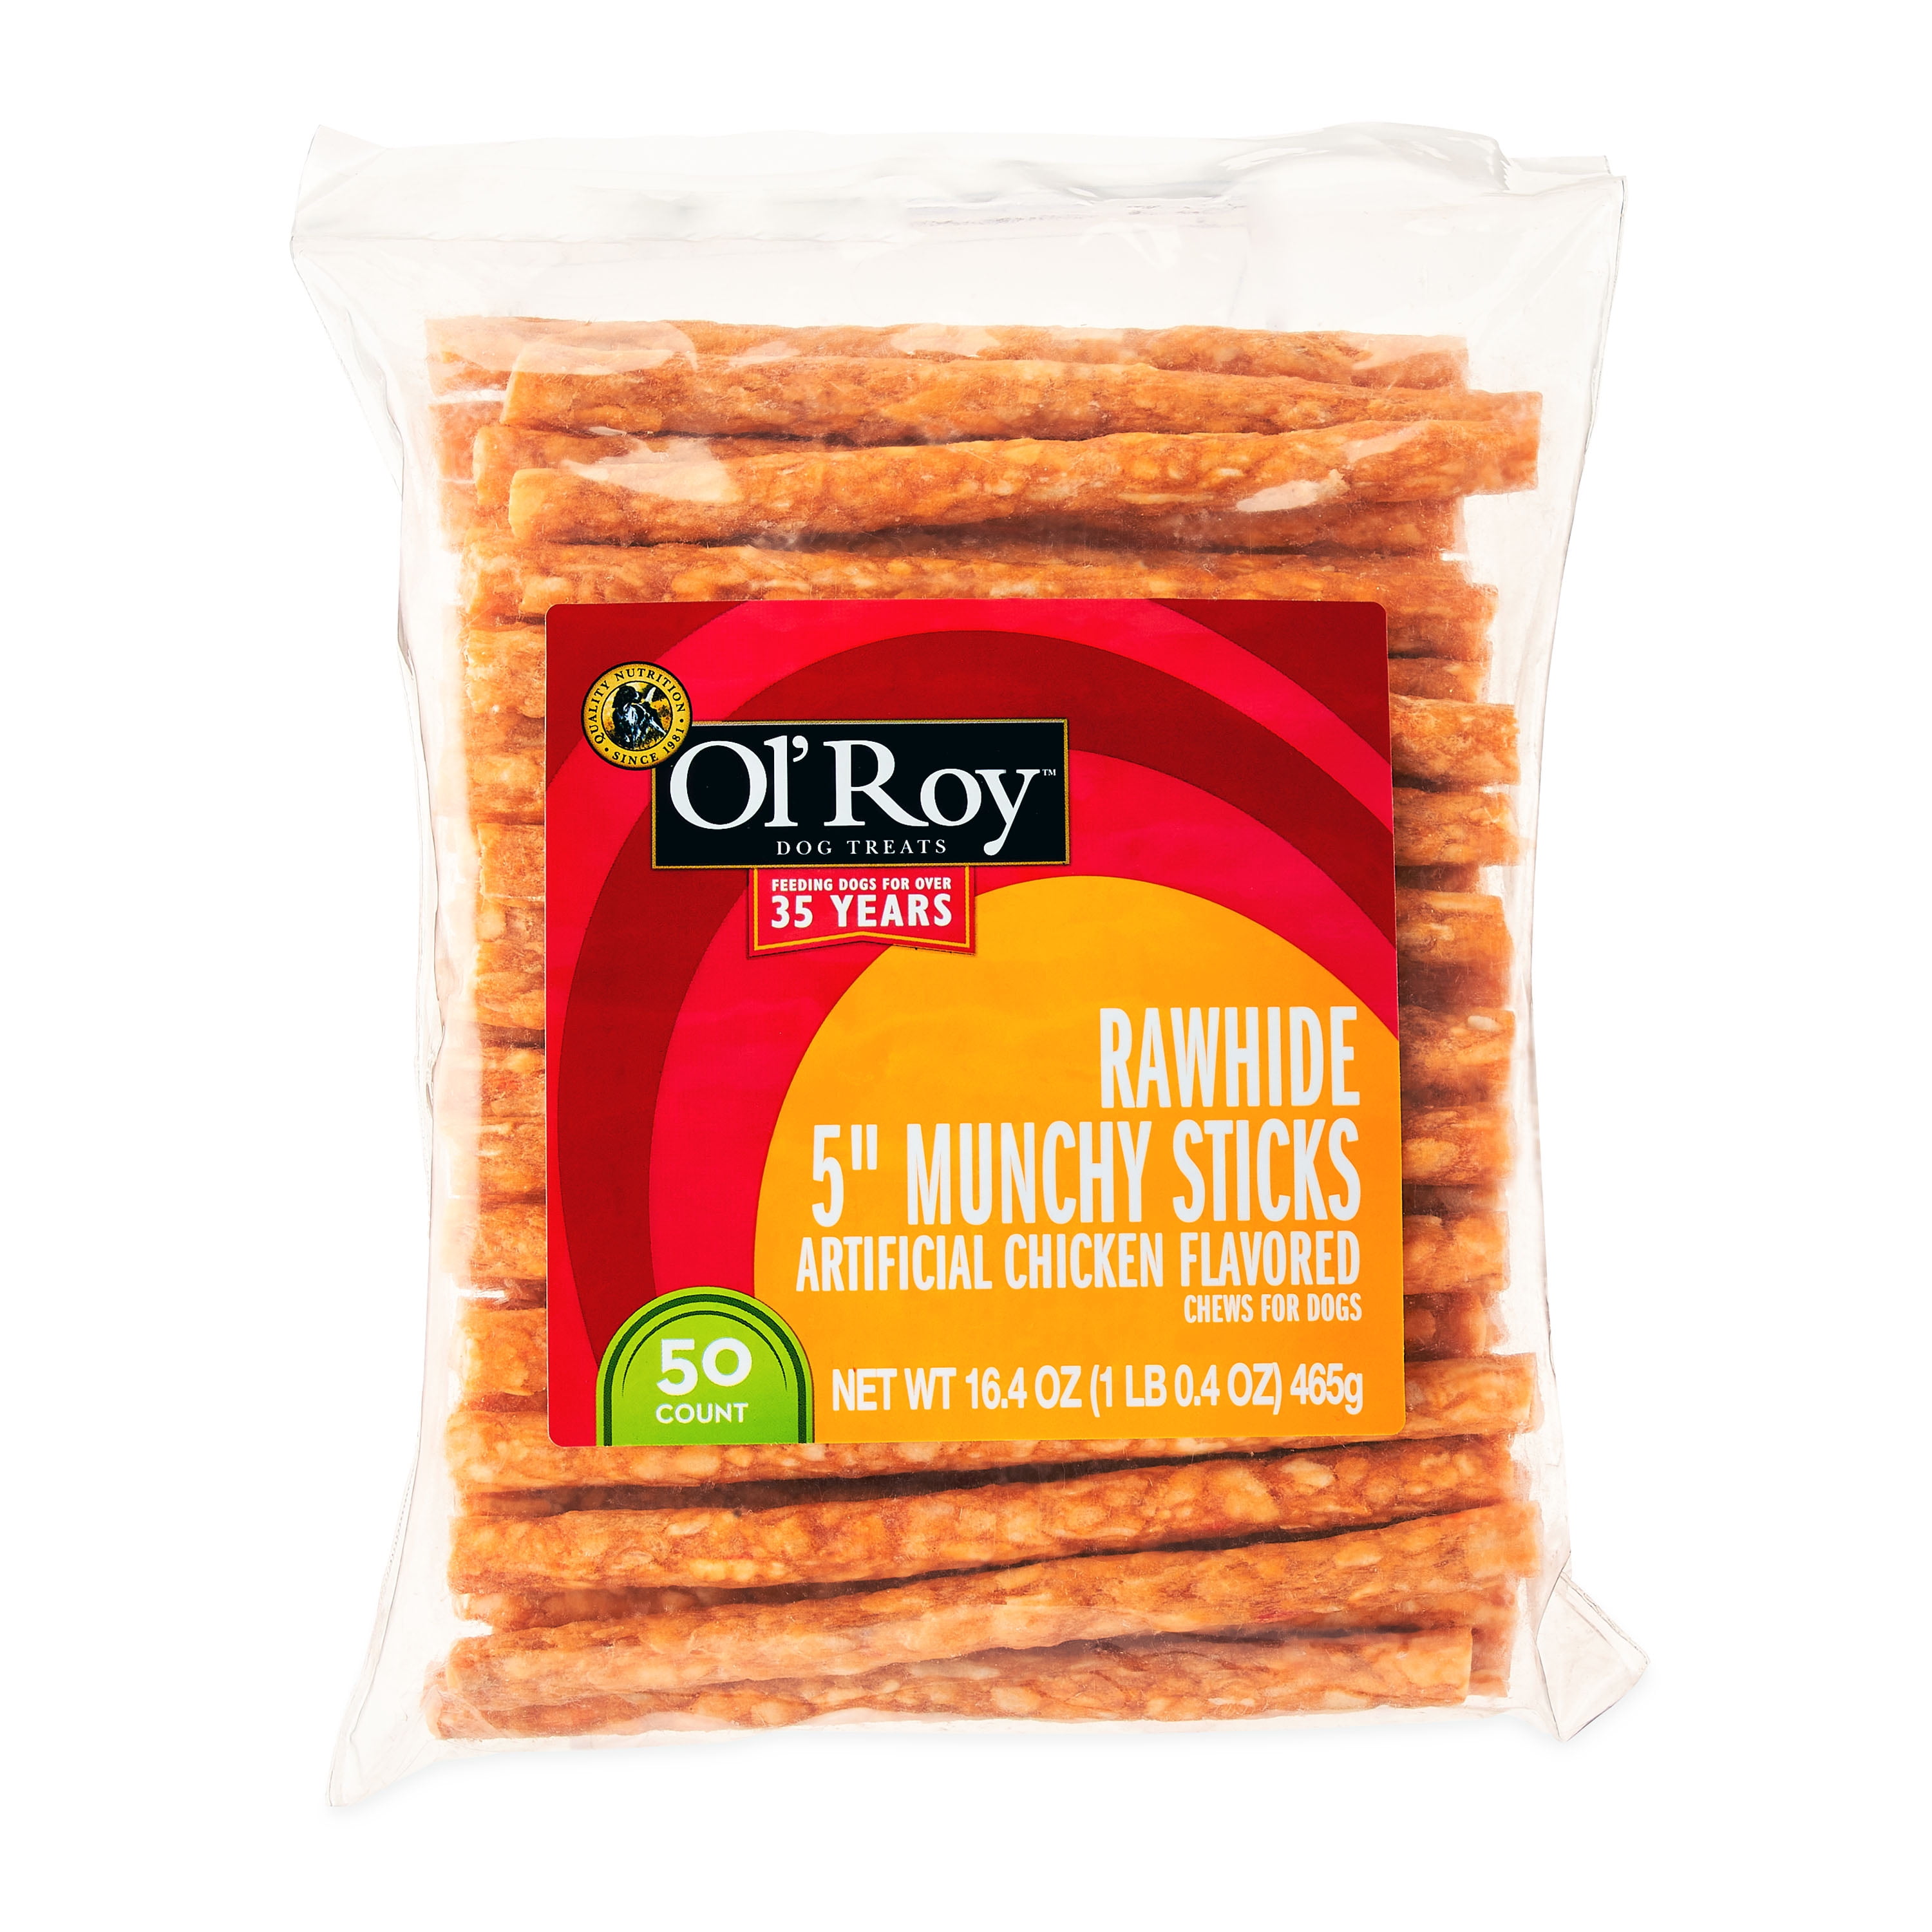 Ol' Roy 5" Rawhide Artificial Chicken Flavored Munchy Sticks, 16.4 oz, 50 Count